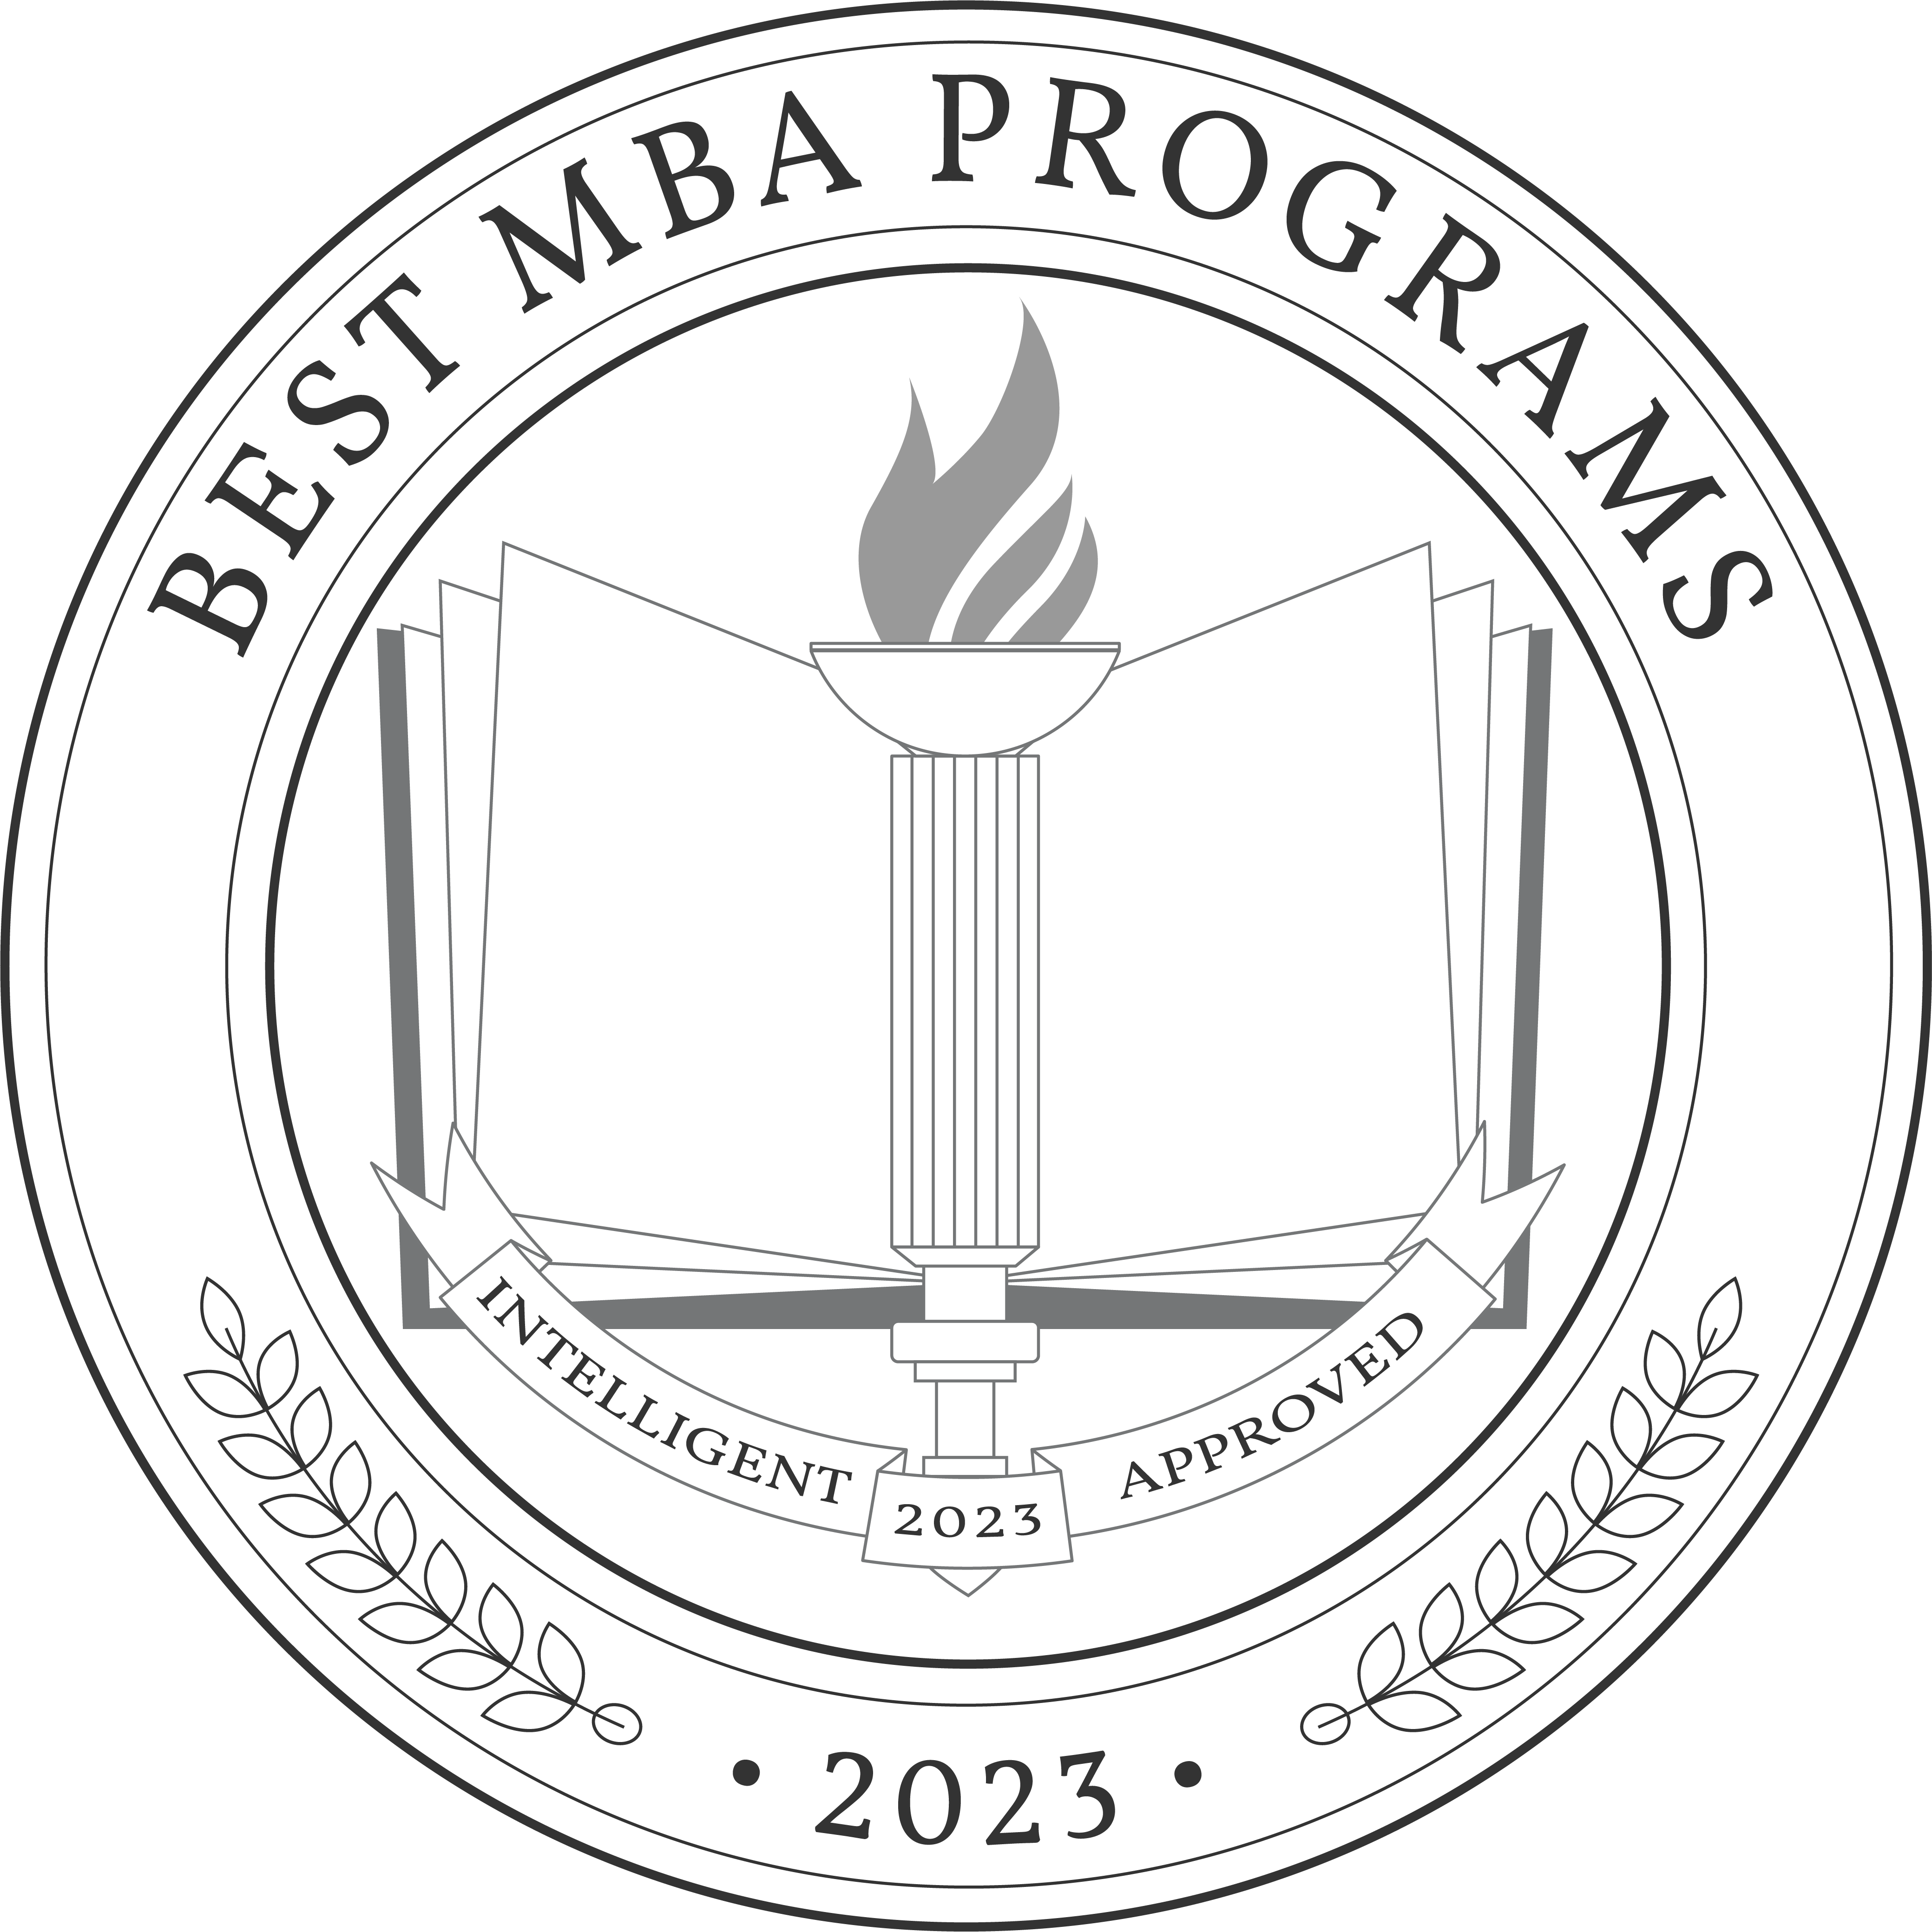 MBA Program Applications 2022-23